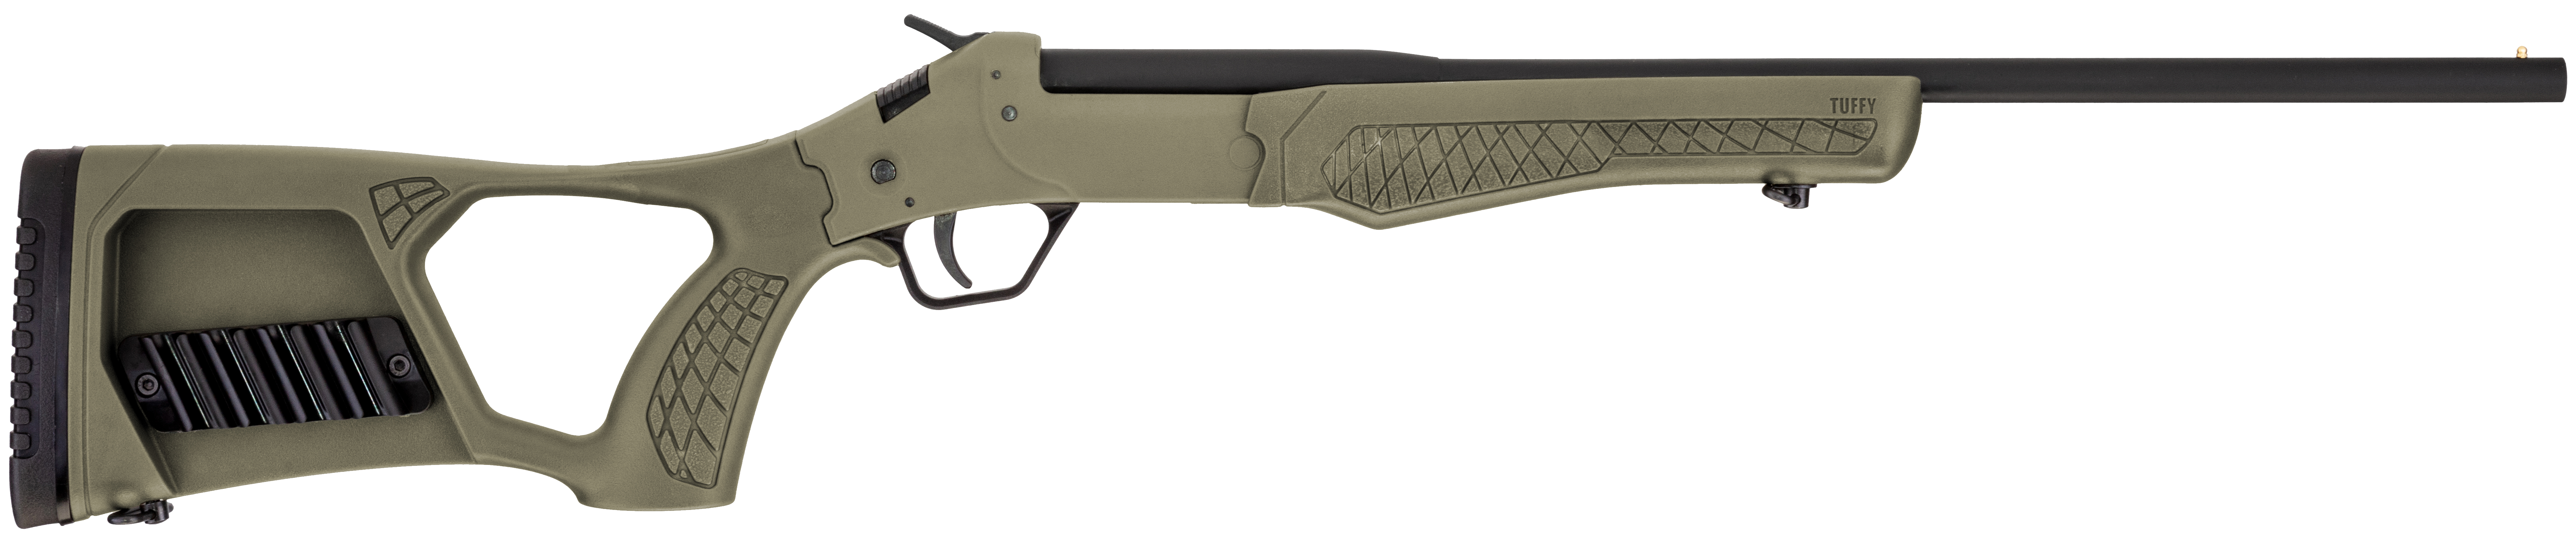 ROSSI TUFFY 410 OD 18.5 - Long Guns